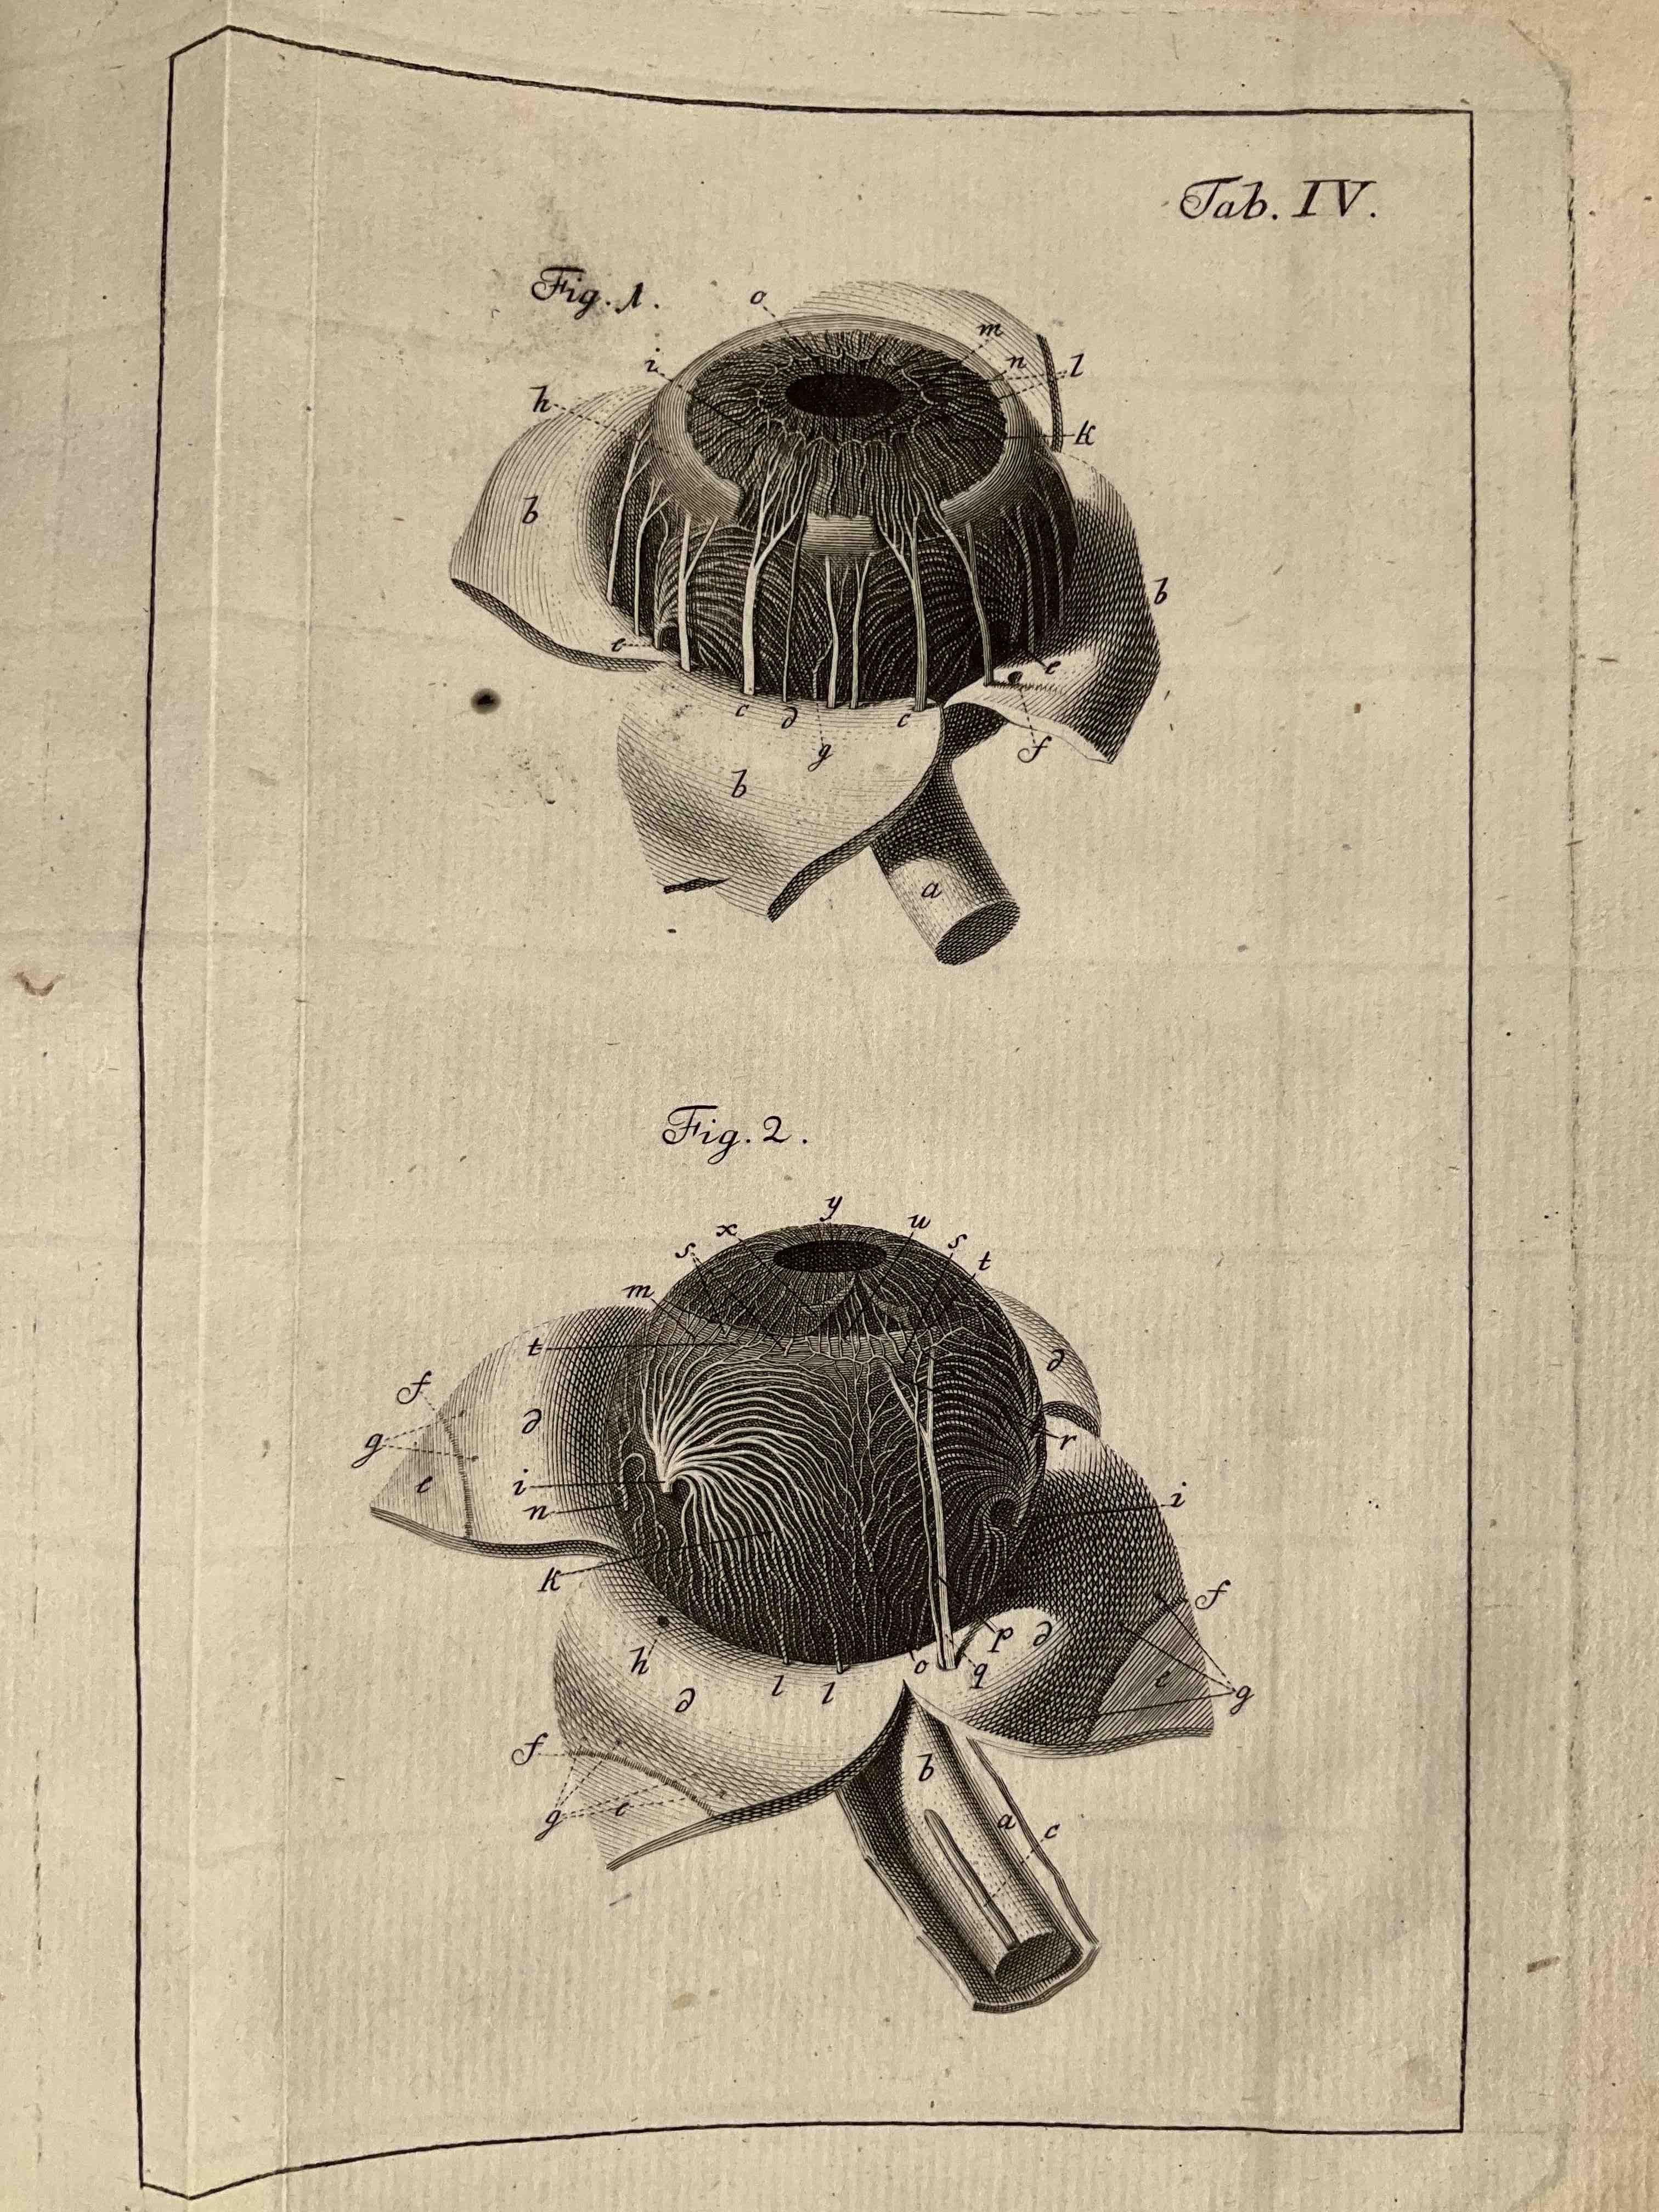 [Ophtalmologie] Johann Gottfried Zinn, Descriptio anatomica oculi humani iconibus illustrata.
Göttingen,...